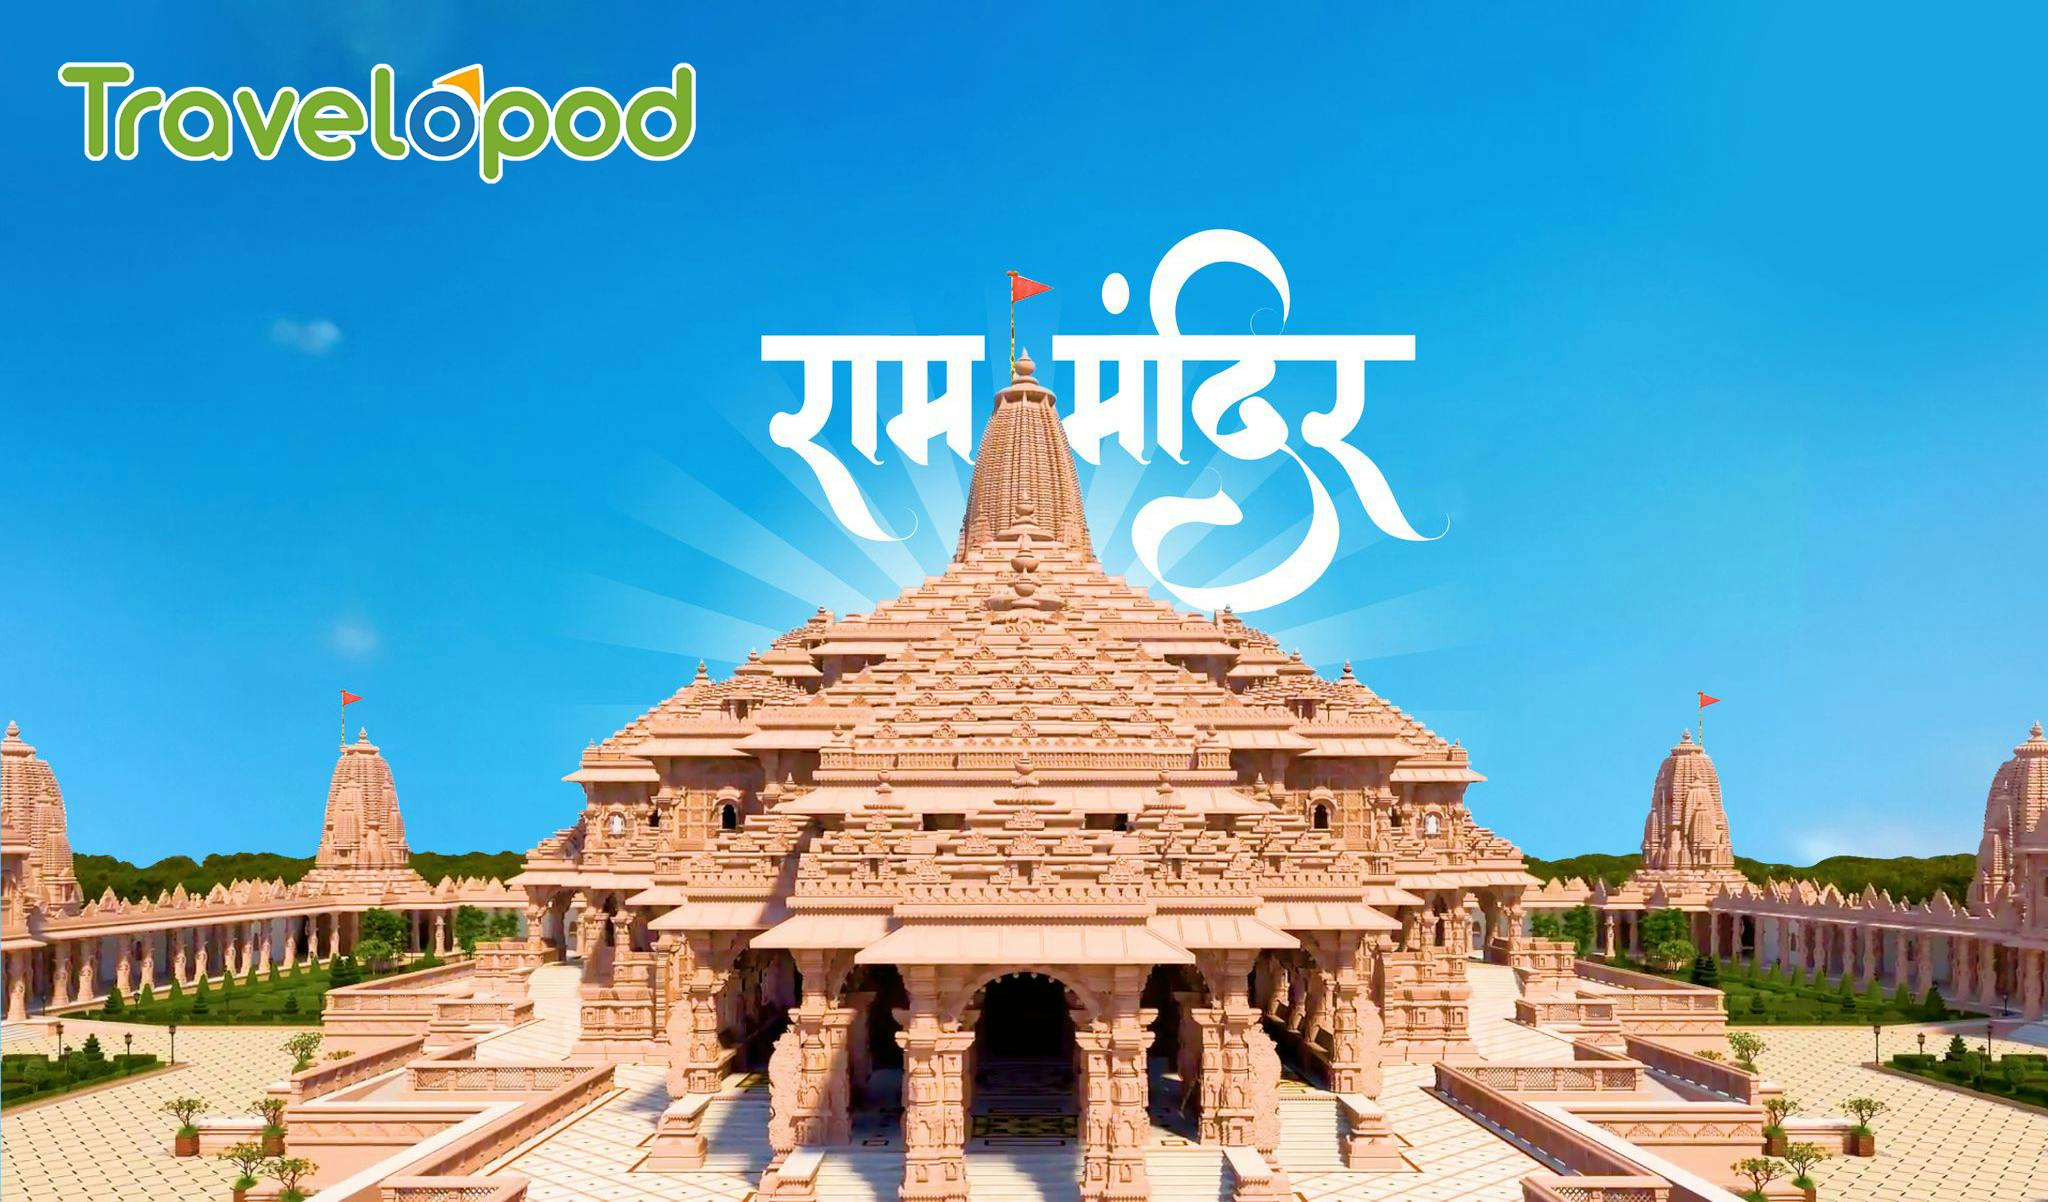 India's Tourism Gemstone? Ayodhya Ram Mandir Expected to Draw 50 Million Visitors (Jefferies)